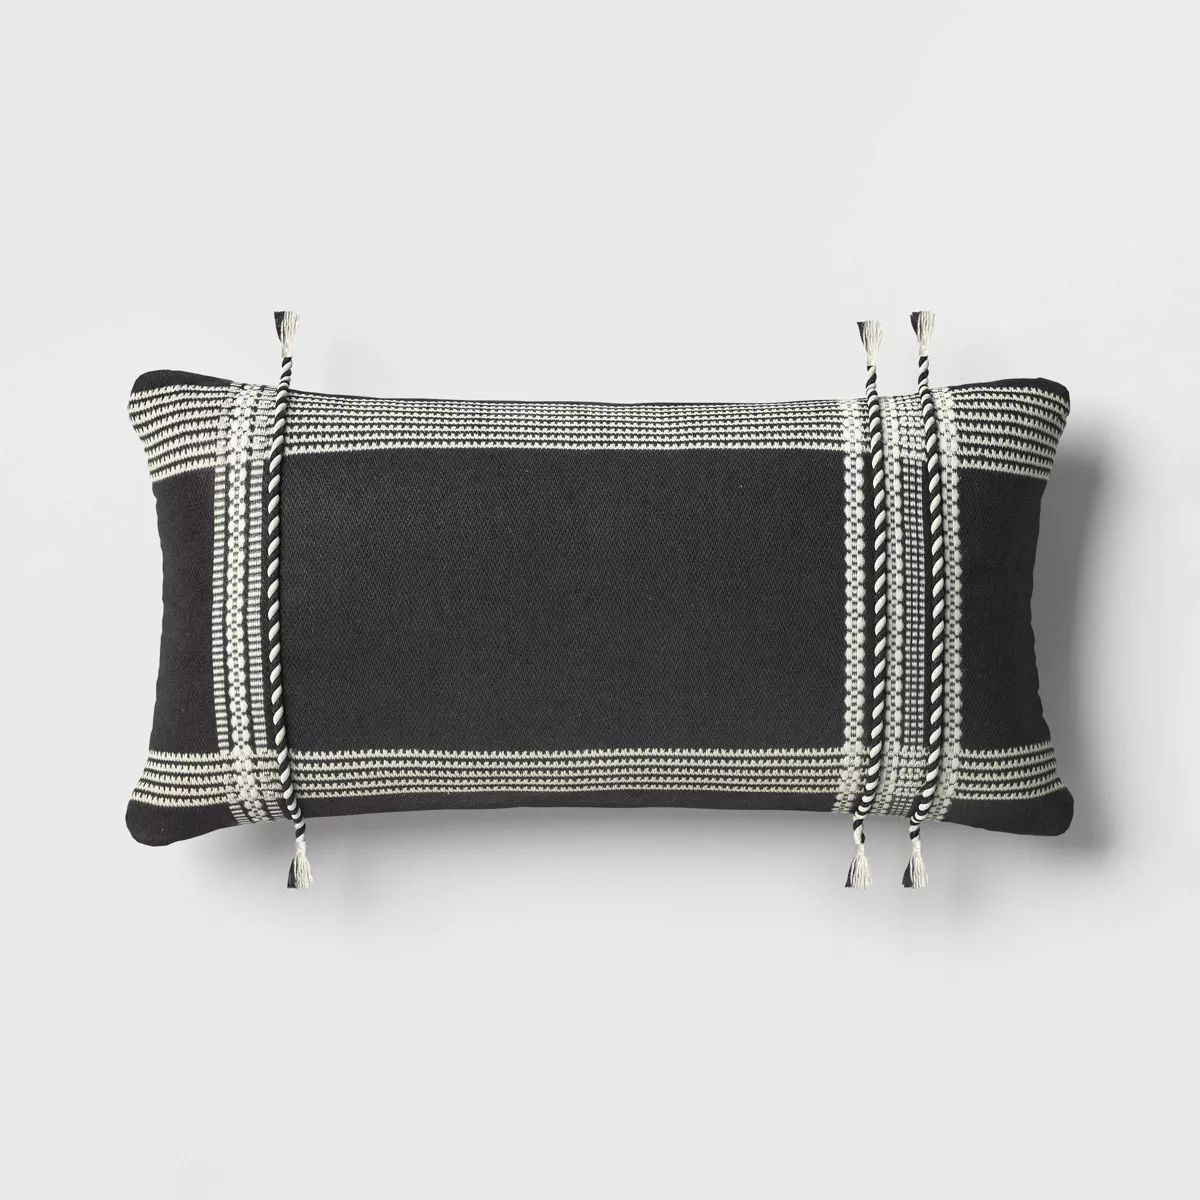 12"x27" Twists and Tassles Rectangular Outdoor Lumbar Pillow Black/White - Threshold™ | Target